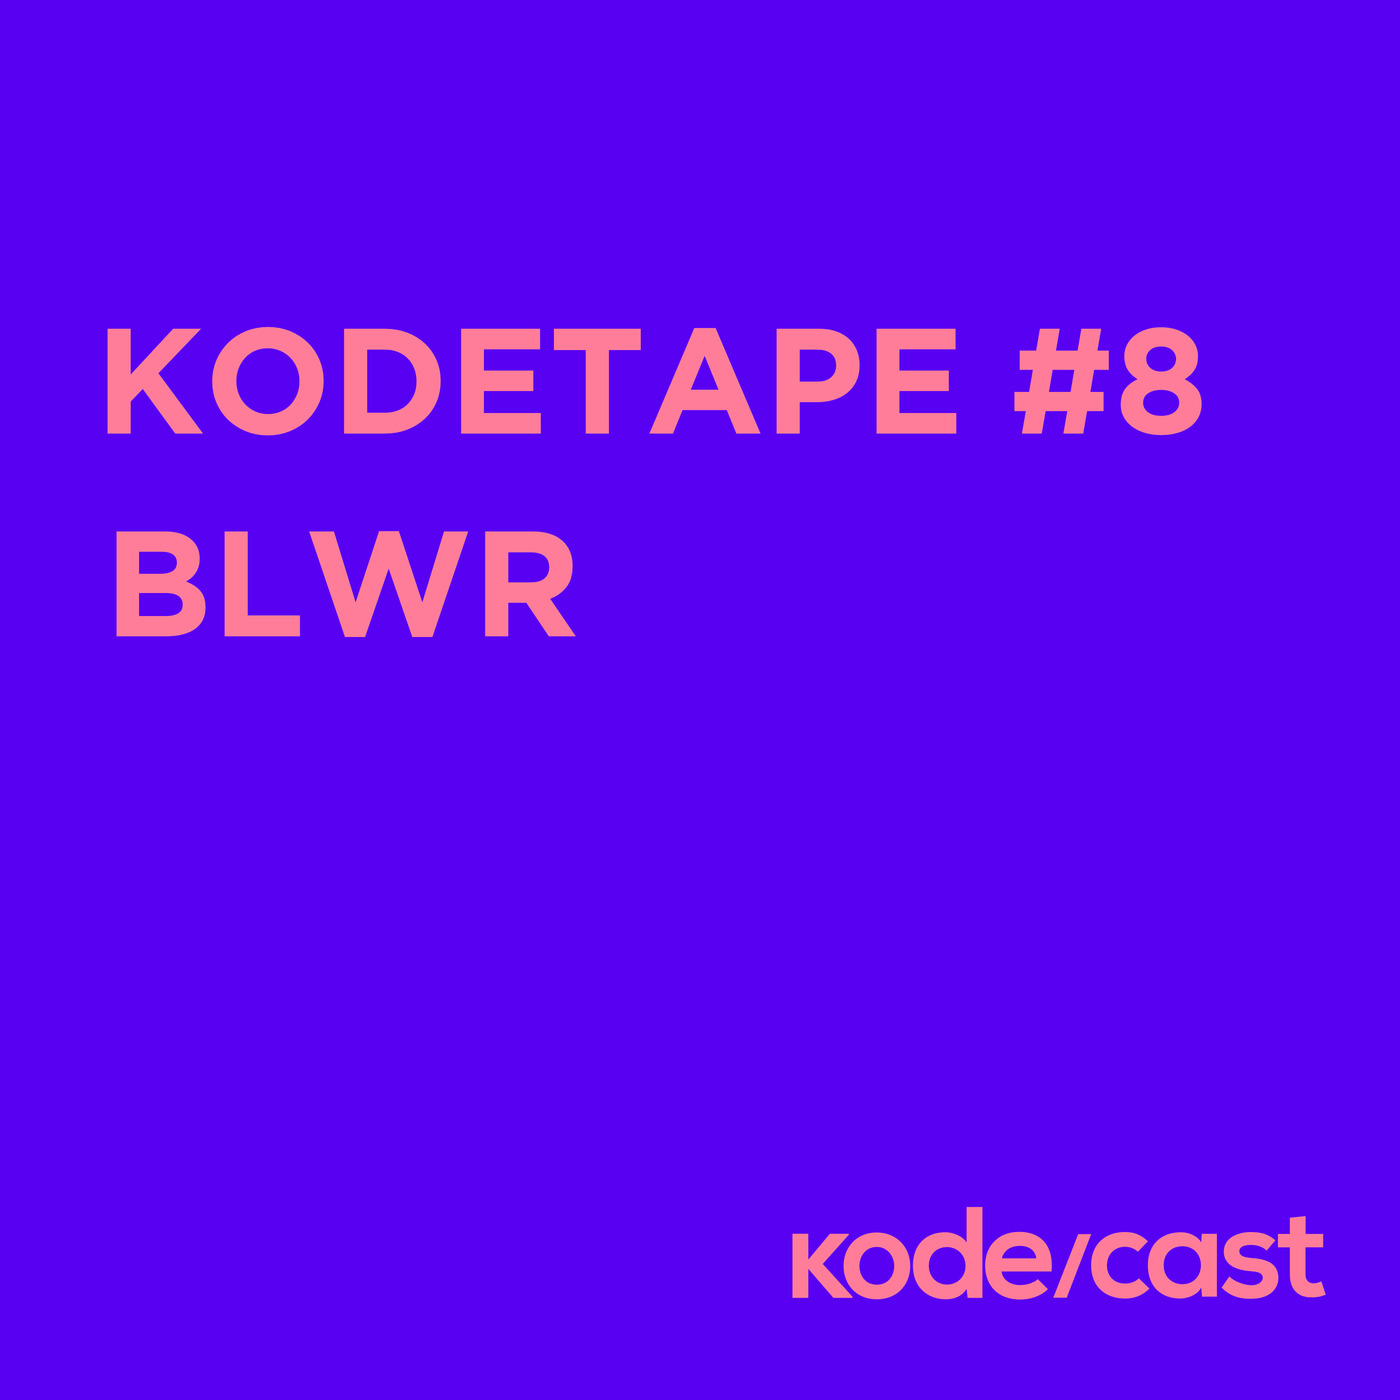 kodetape #8 BLWR